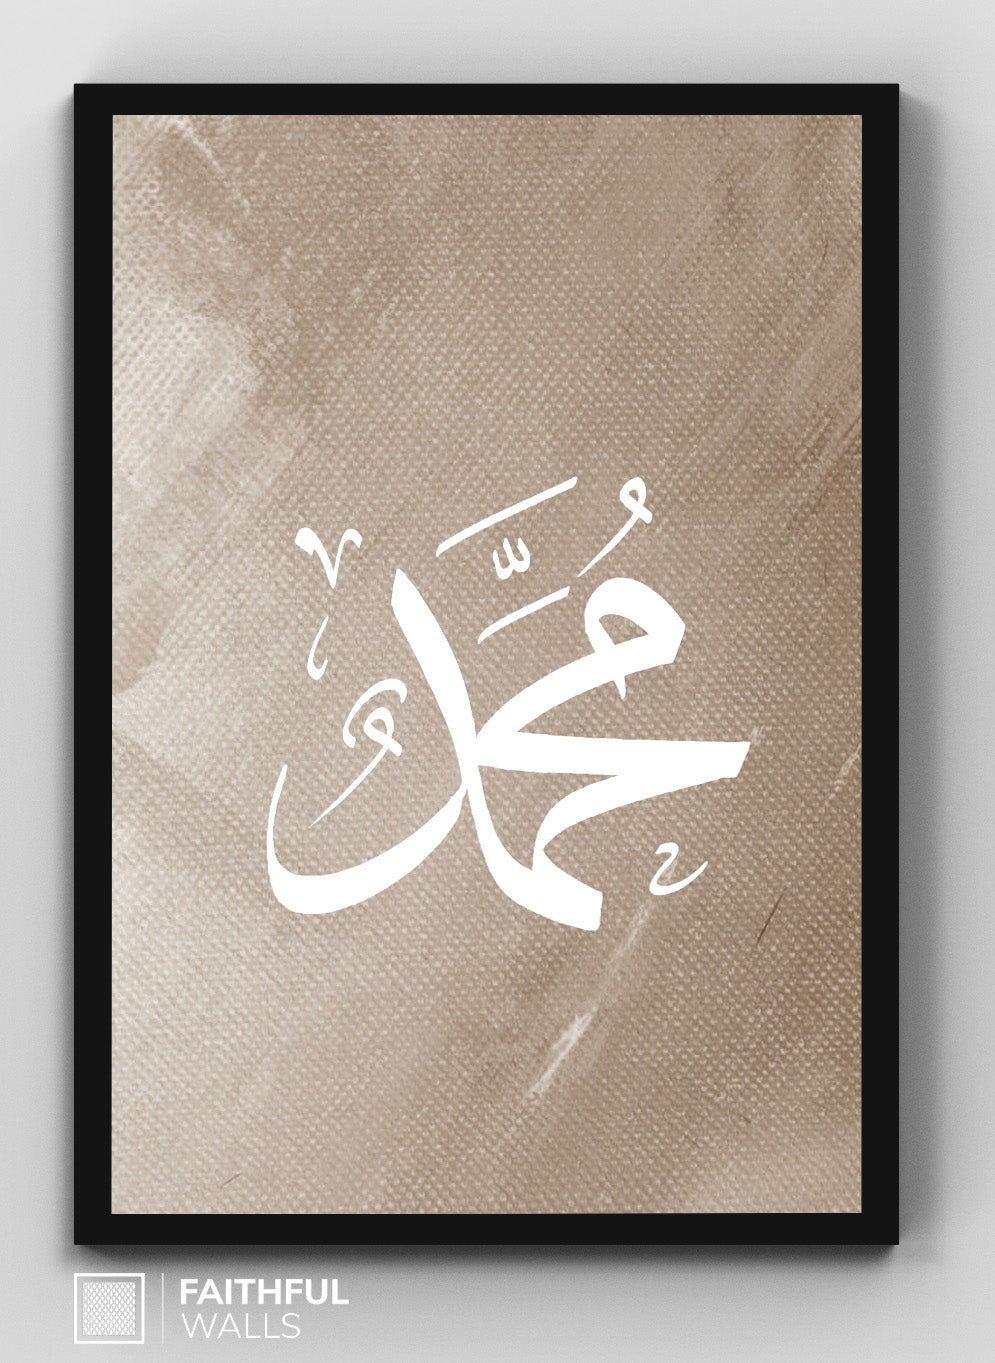 Muhammad Allah - Abstract art